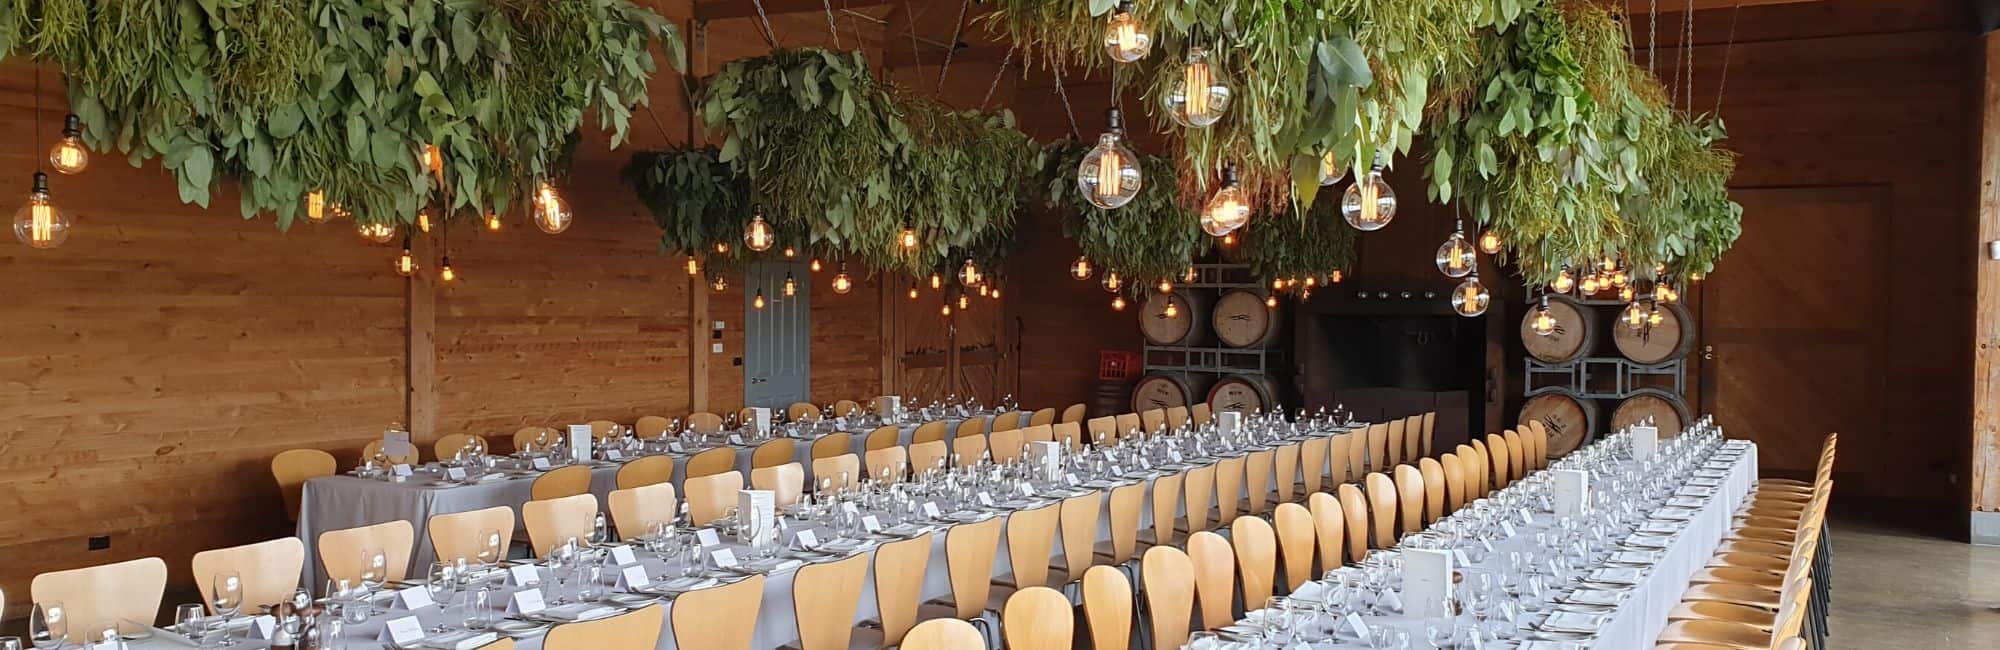 Hobart Events | Wedding Festoon Pendant Lighting Hire at Frogmore Creek